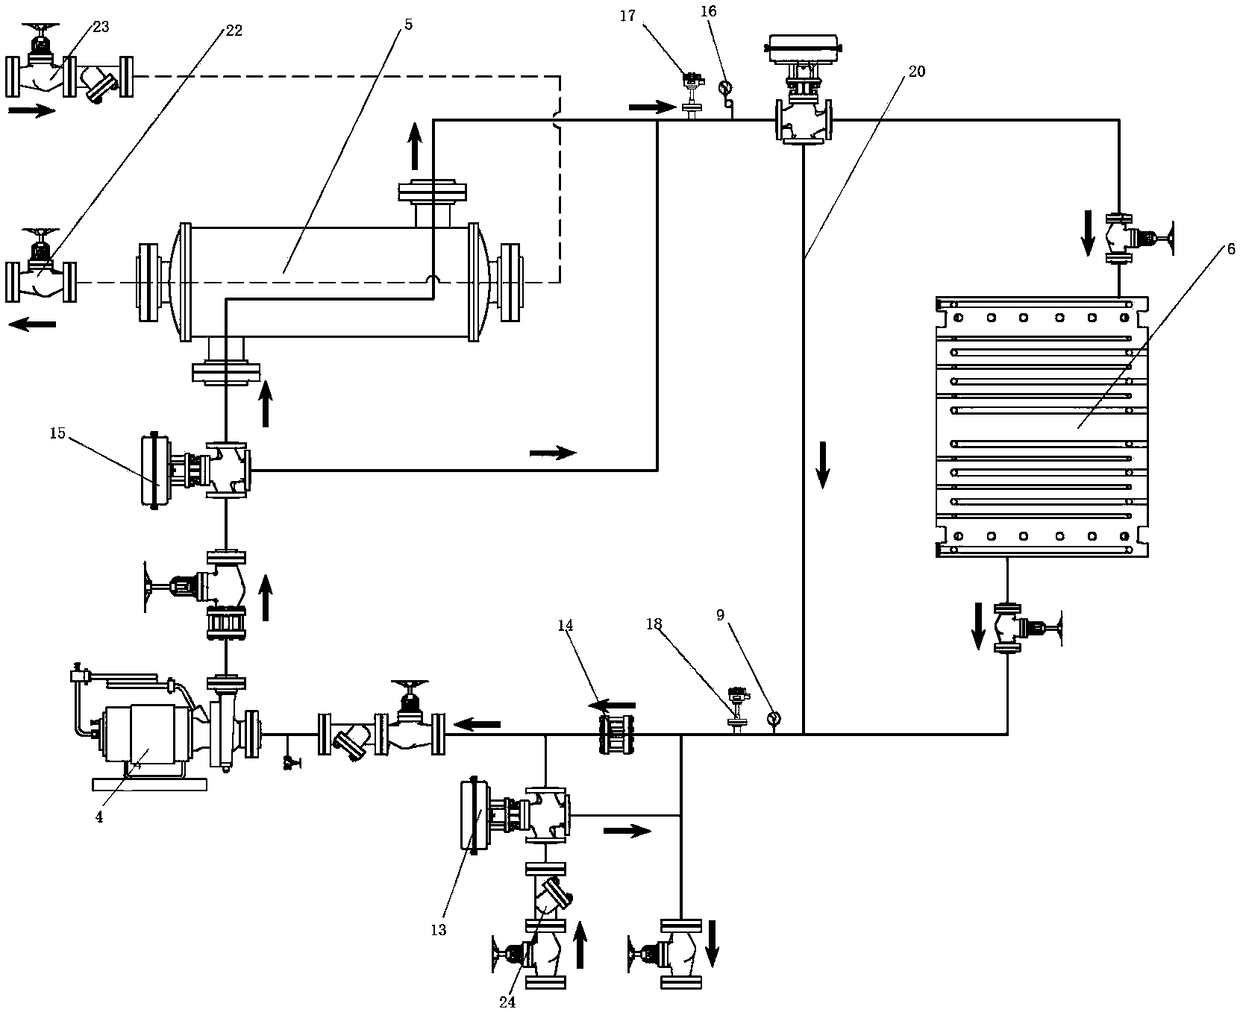 Heat conduction oil heat-exchange system